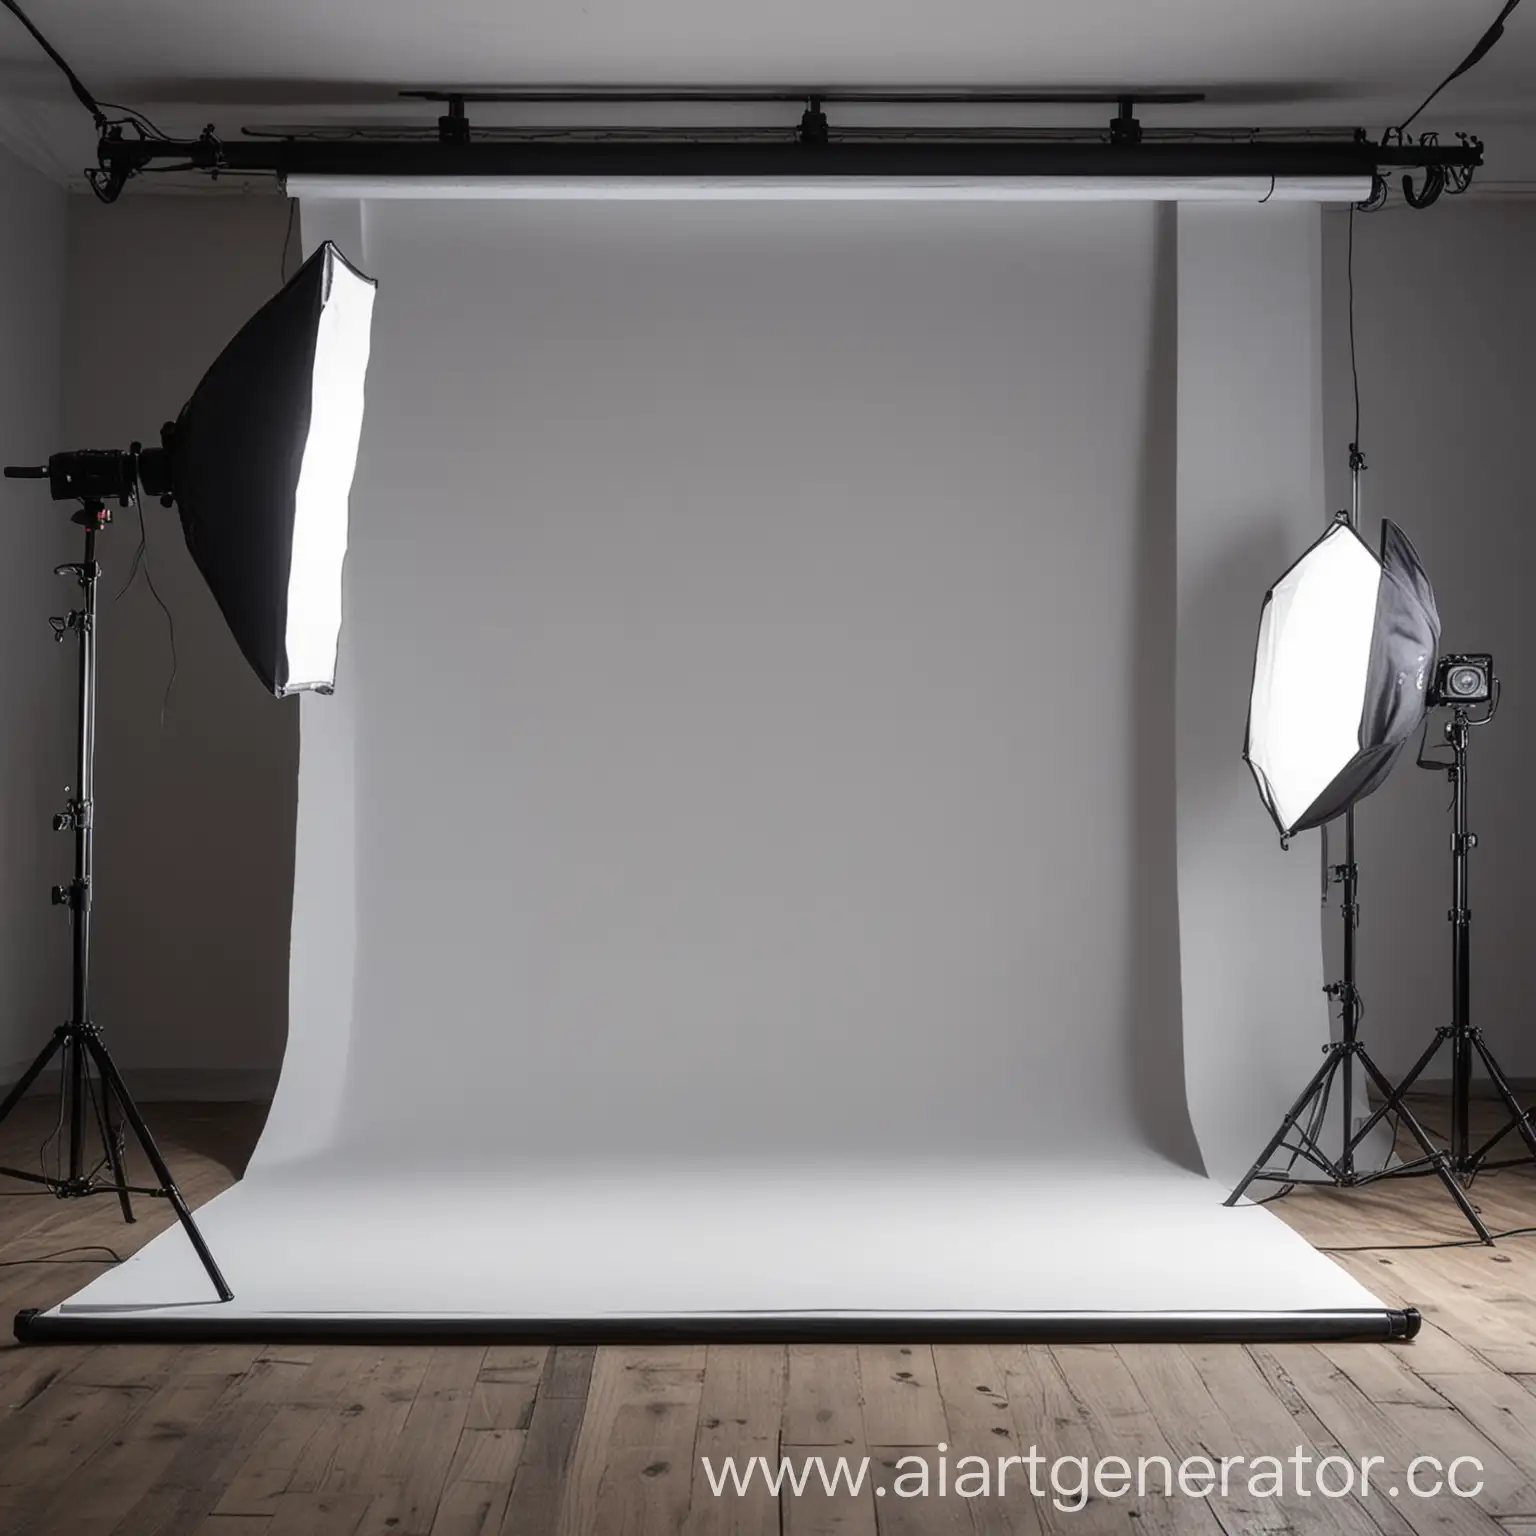 Professional-Photo-Studio-Equipment-Displayed-in-Sleek-Internet-Store-Setup